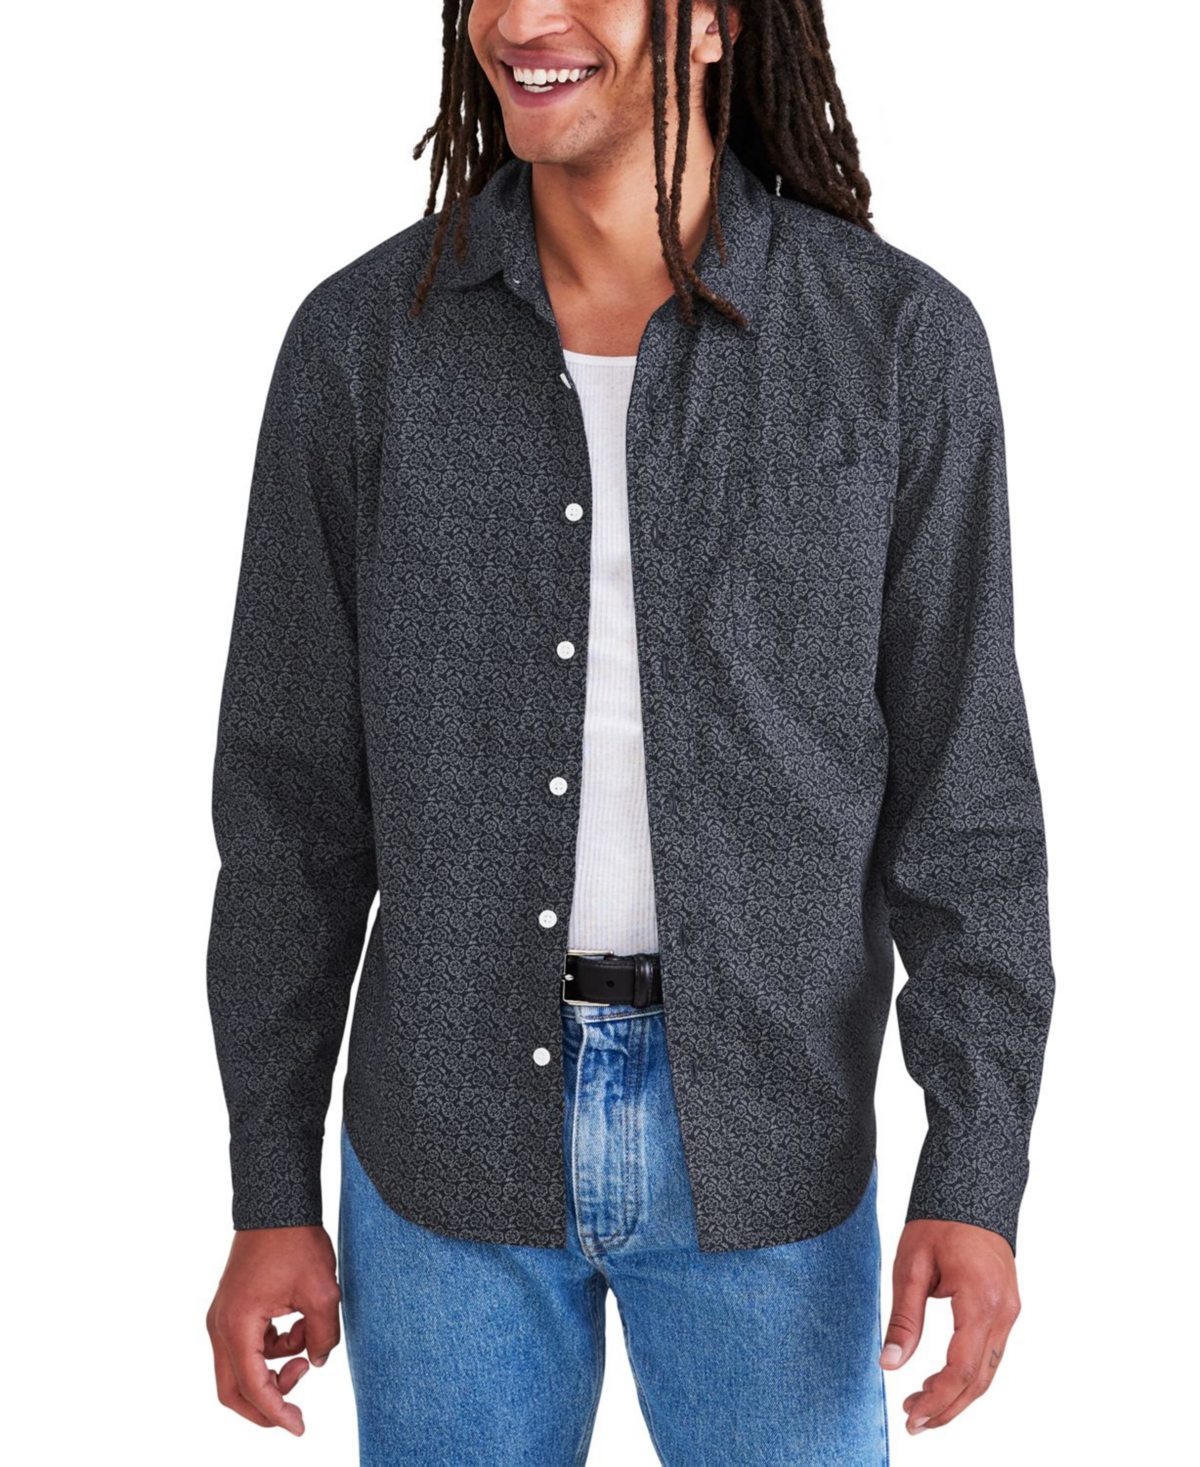 Men's Long-Sleeve Regular-Fit Printed Casual Shirt - Navy Blazer Print